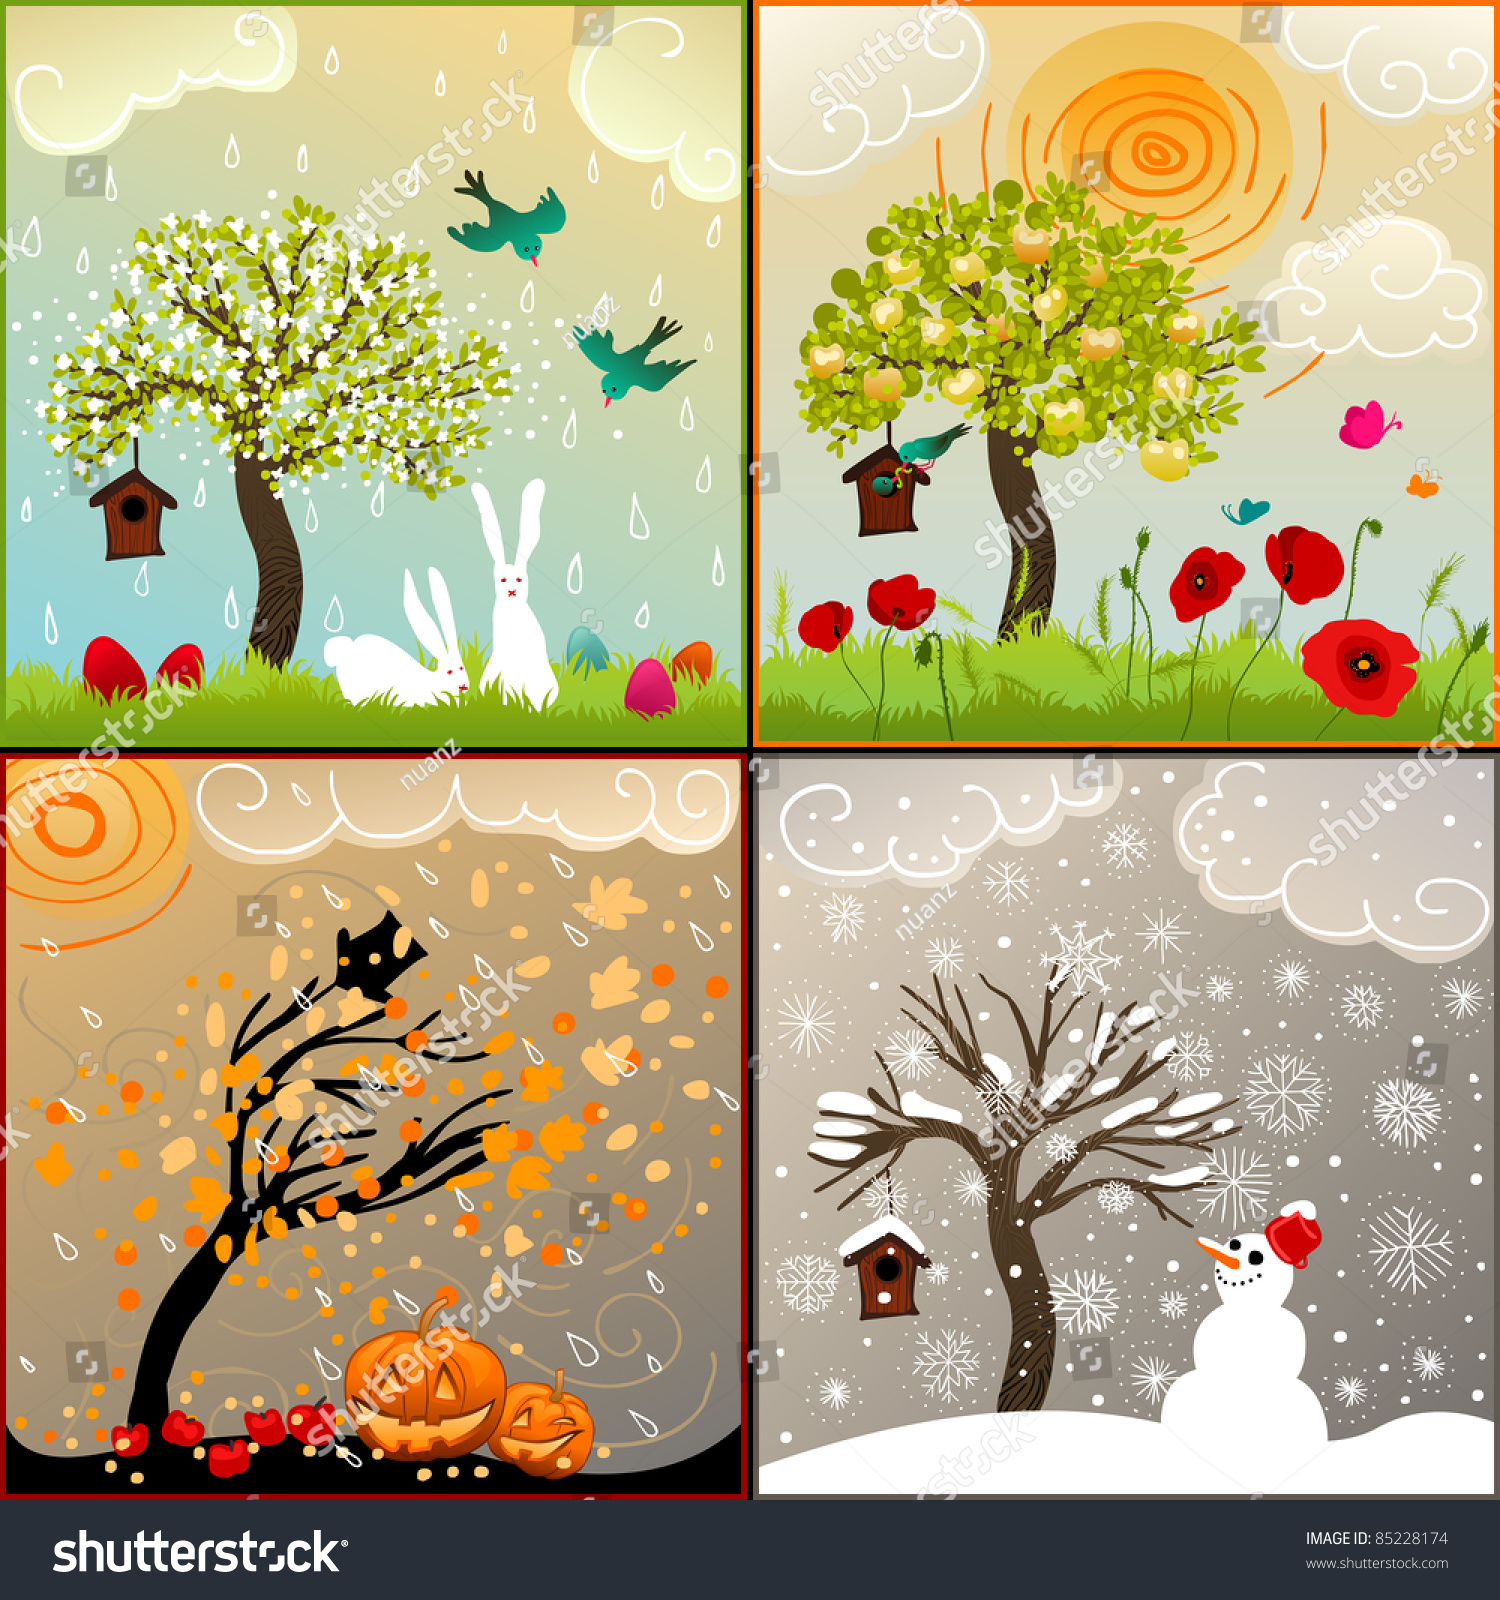 stock-photo-four-seasons-set-with-tree-birdhouse-birds-pumpkin-lanterns-and-snowman-85228174.jpg